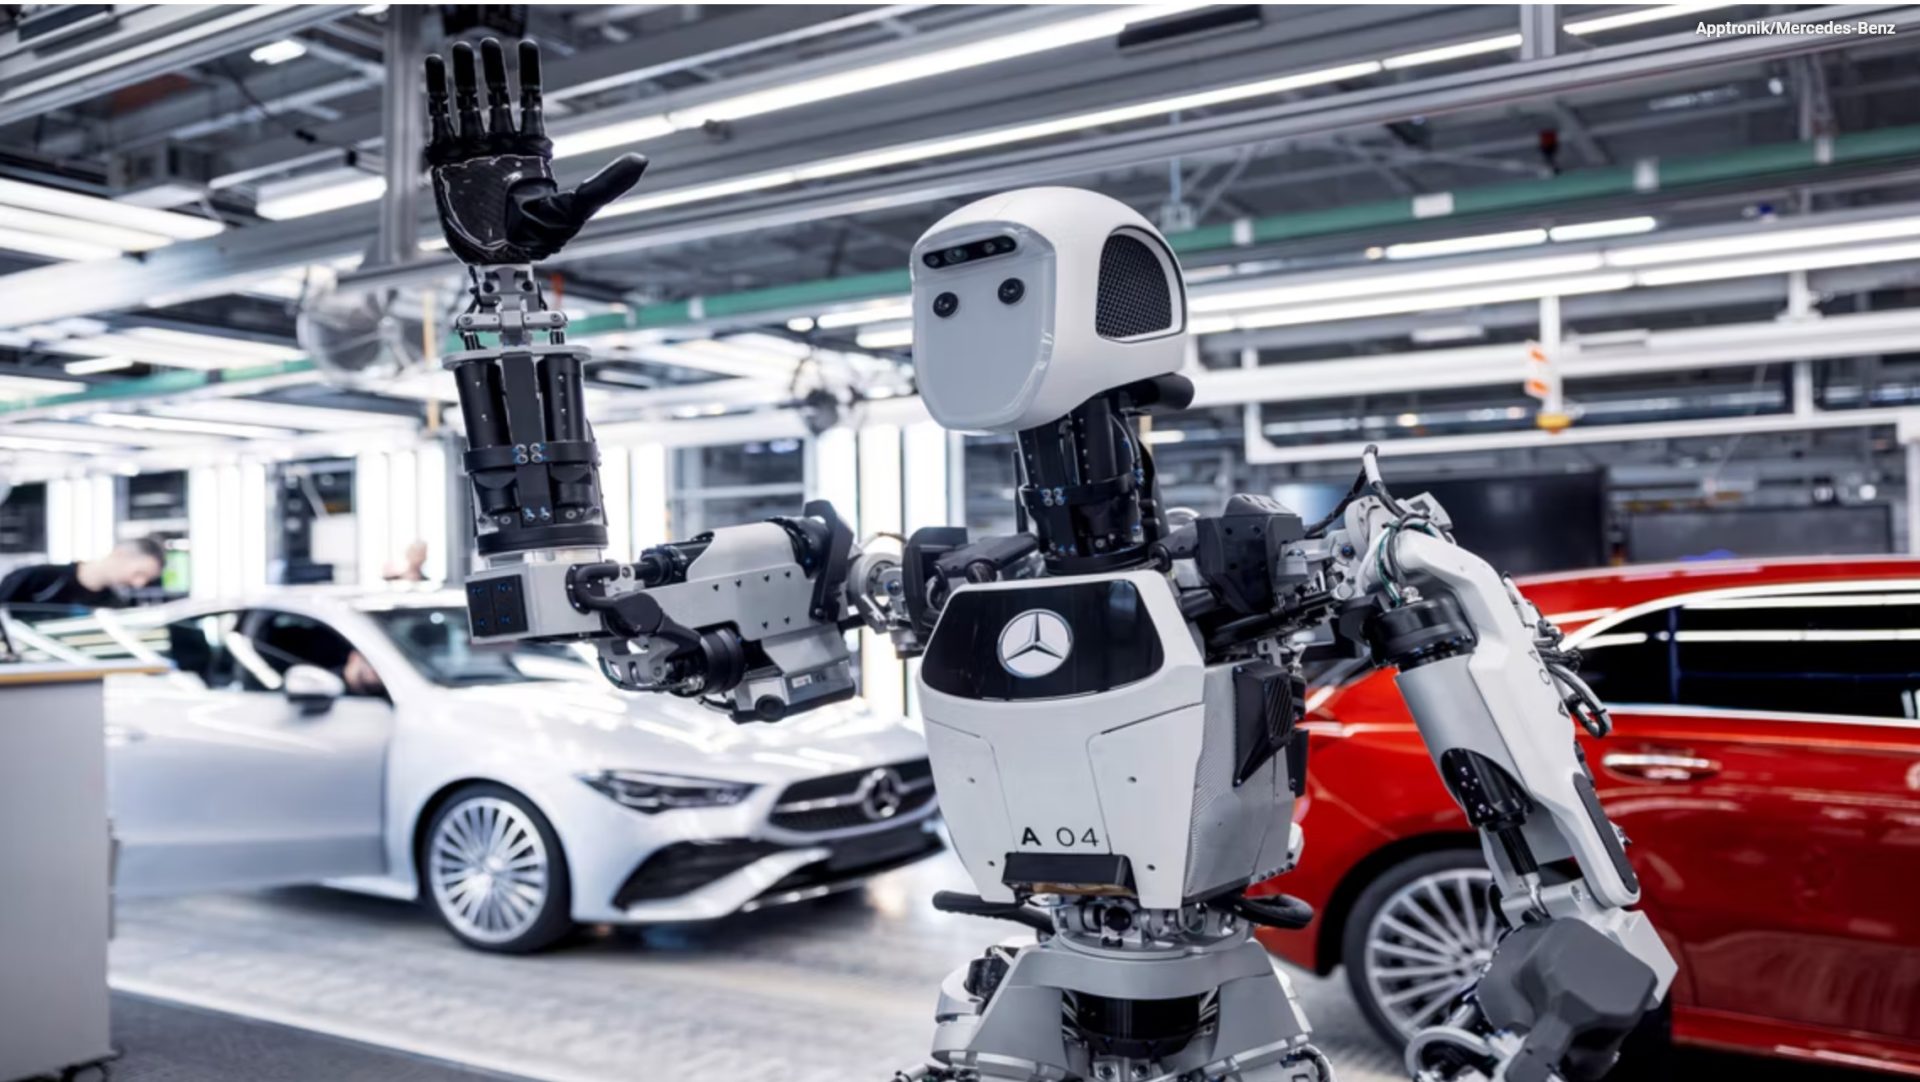 Mercedes κατασκευασμένα από ανθρωποειδή ρομπότ